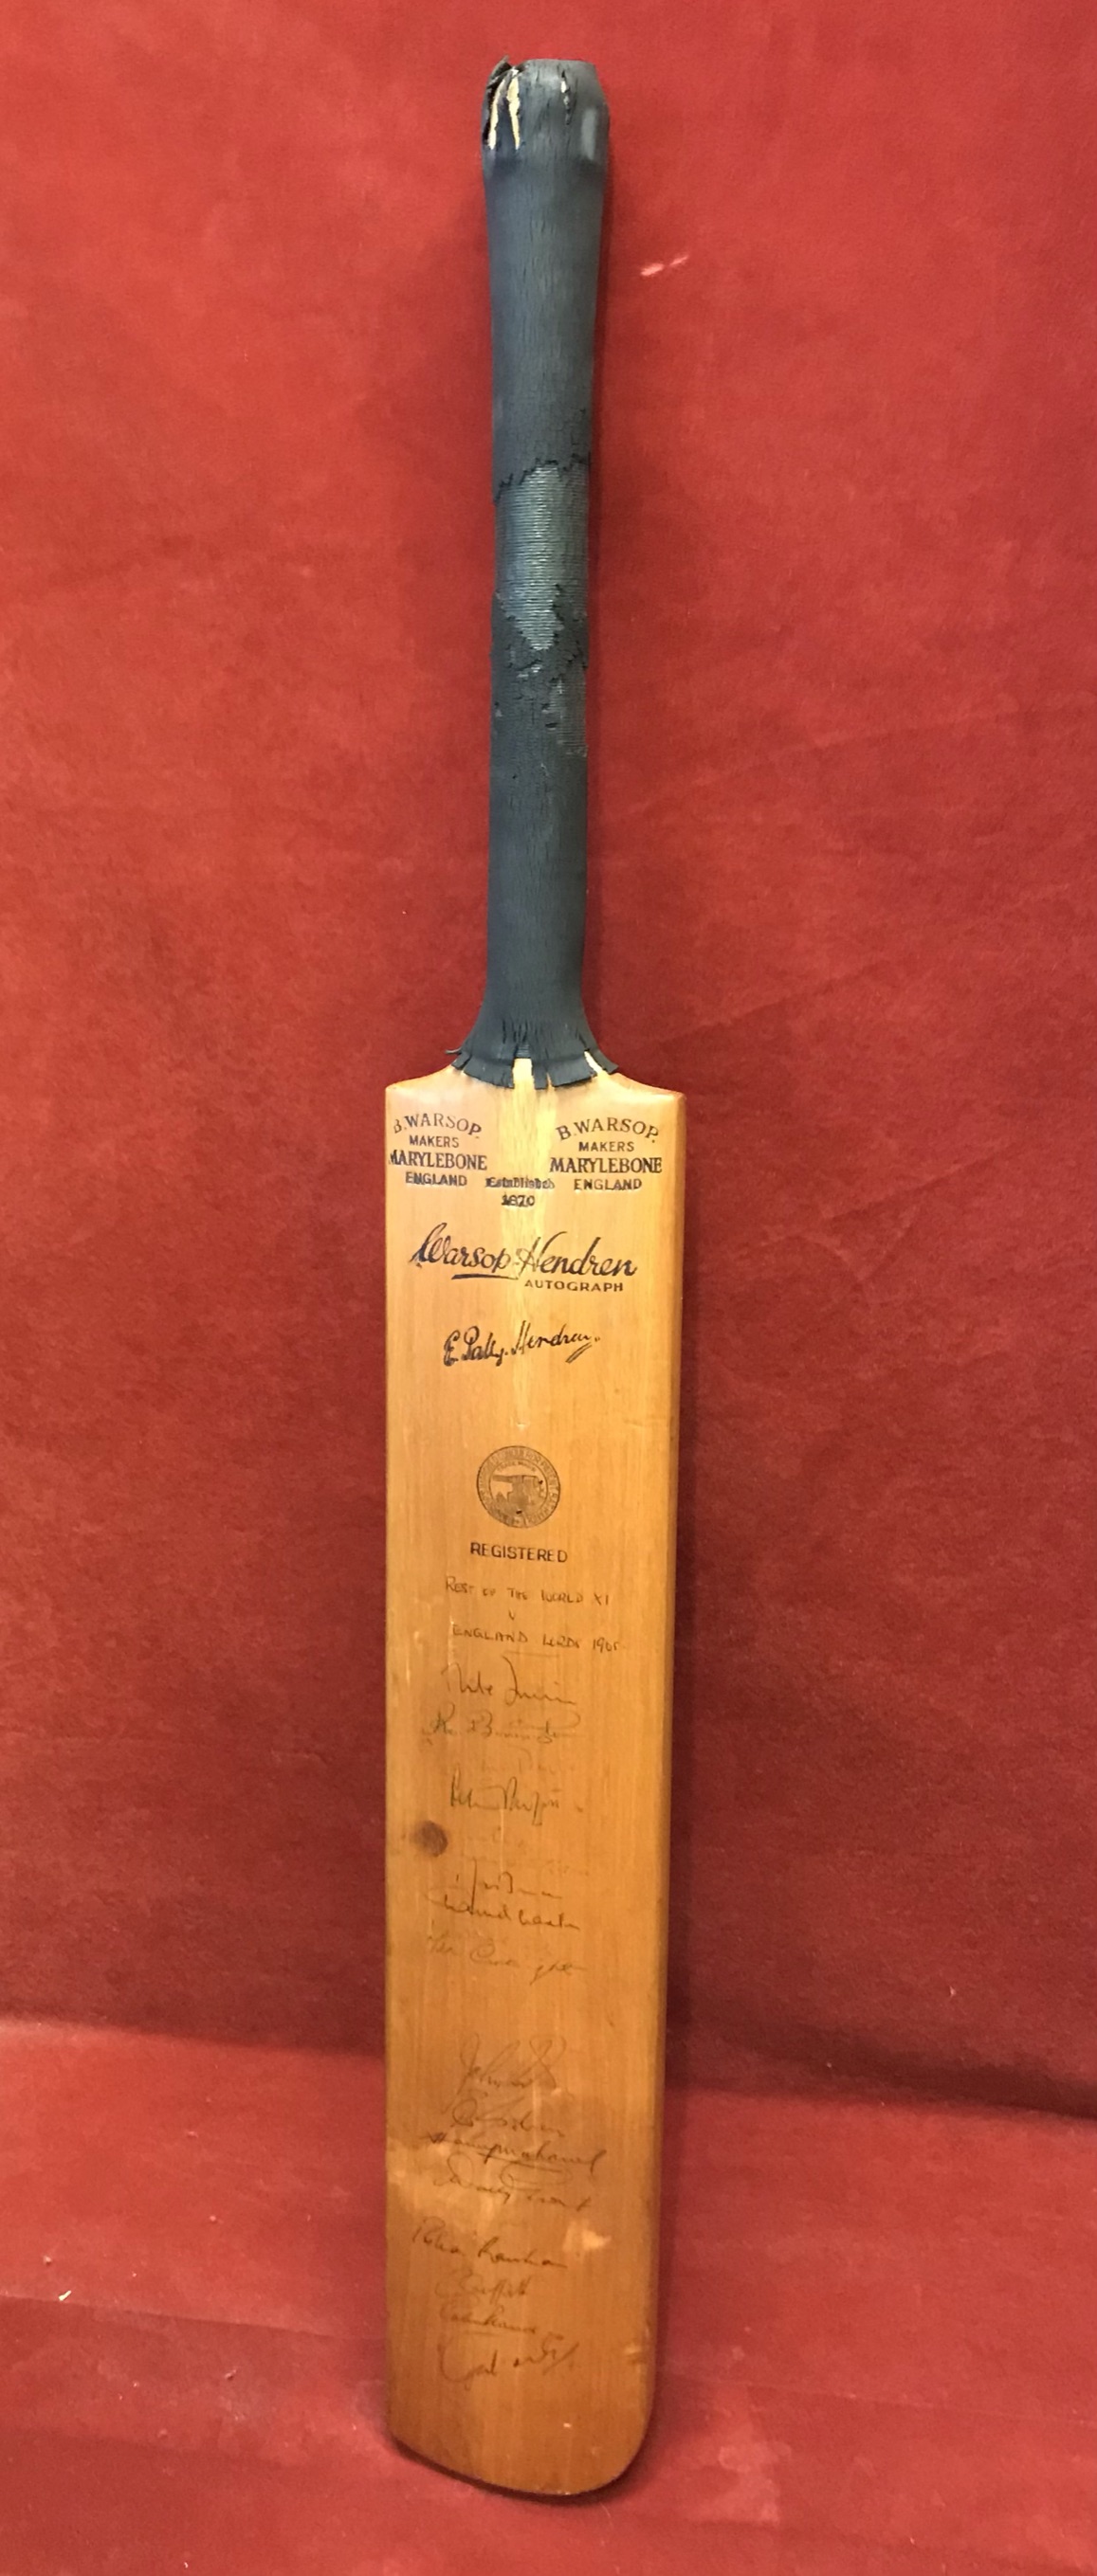 Cricket bat, B Warsop Patsy Hendren Autograph bat signed by the Rest of the World V England